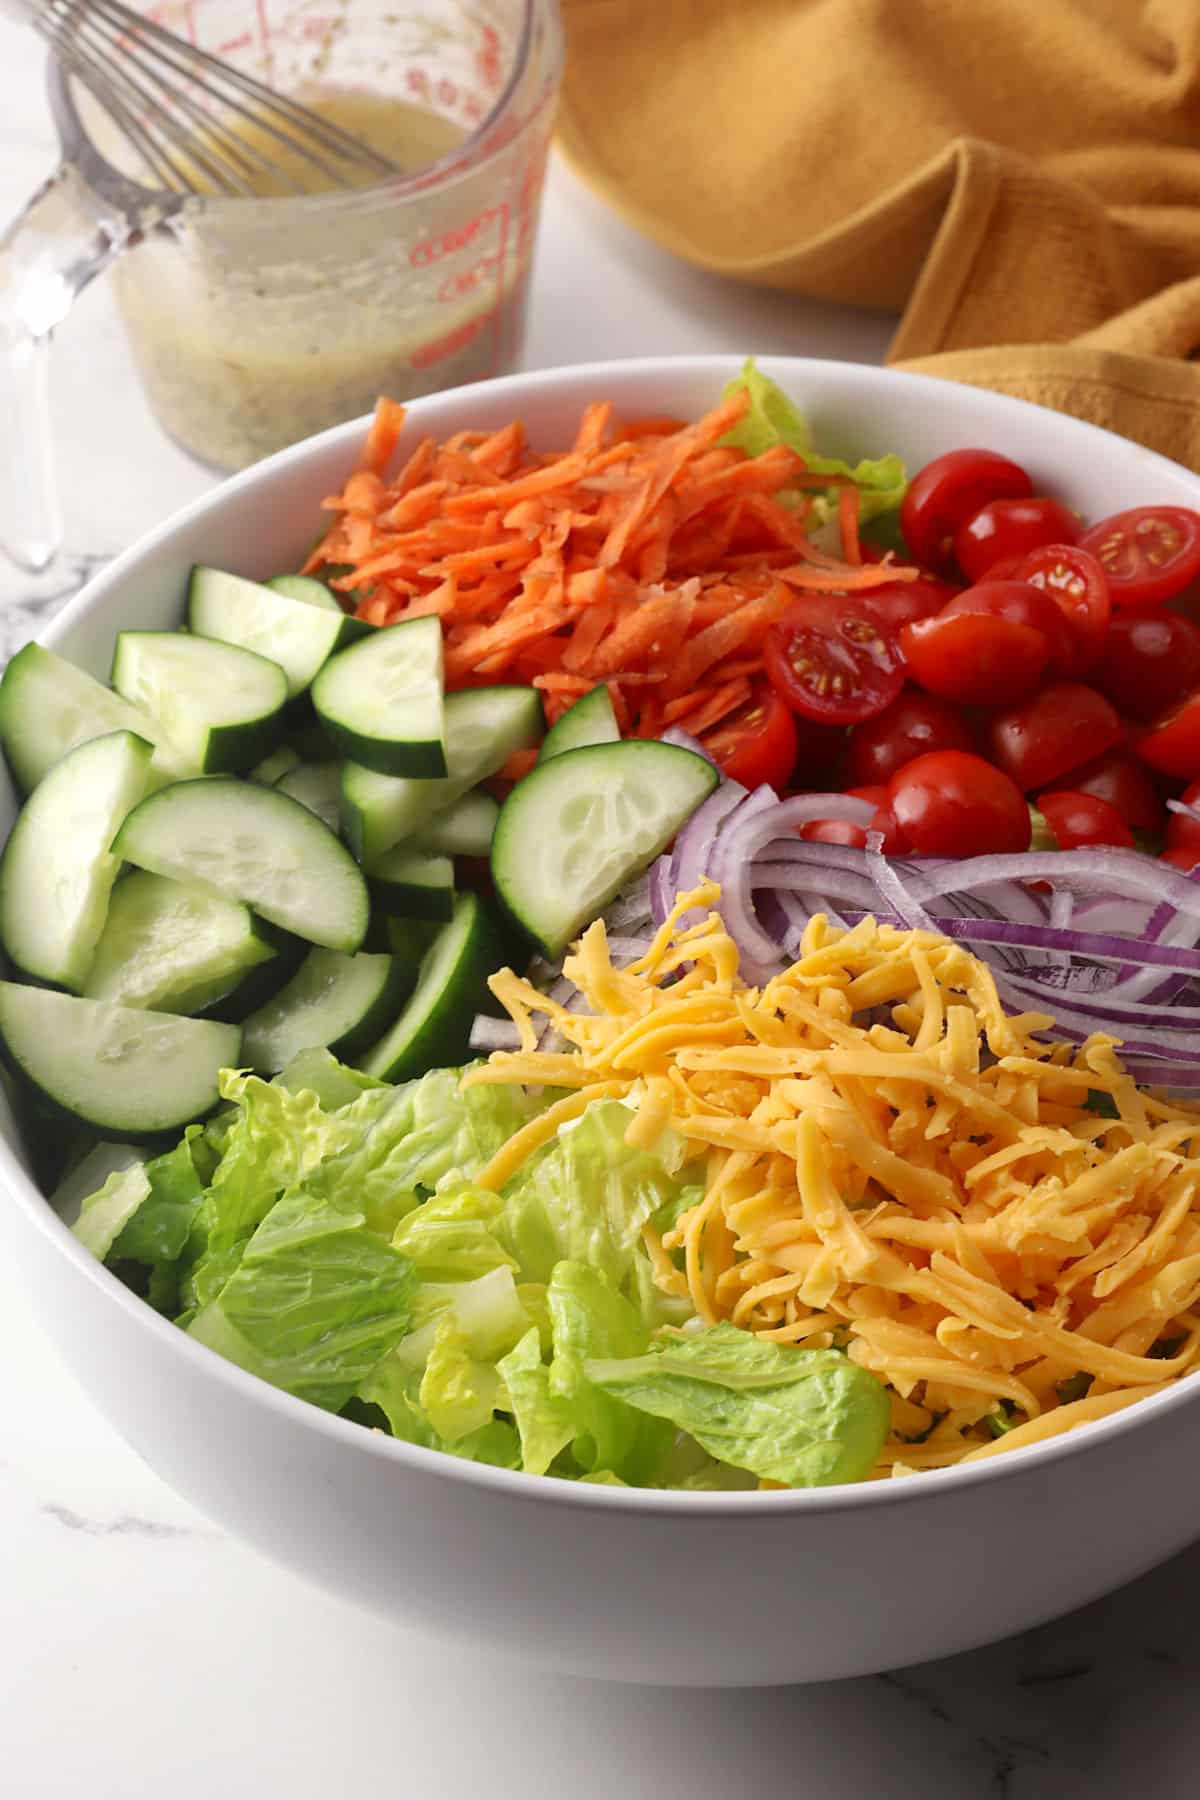 Garden salad ingredients in a large serving bowl.